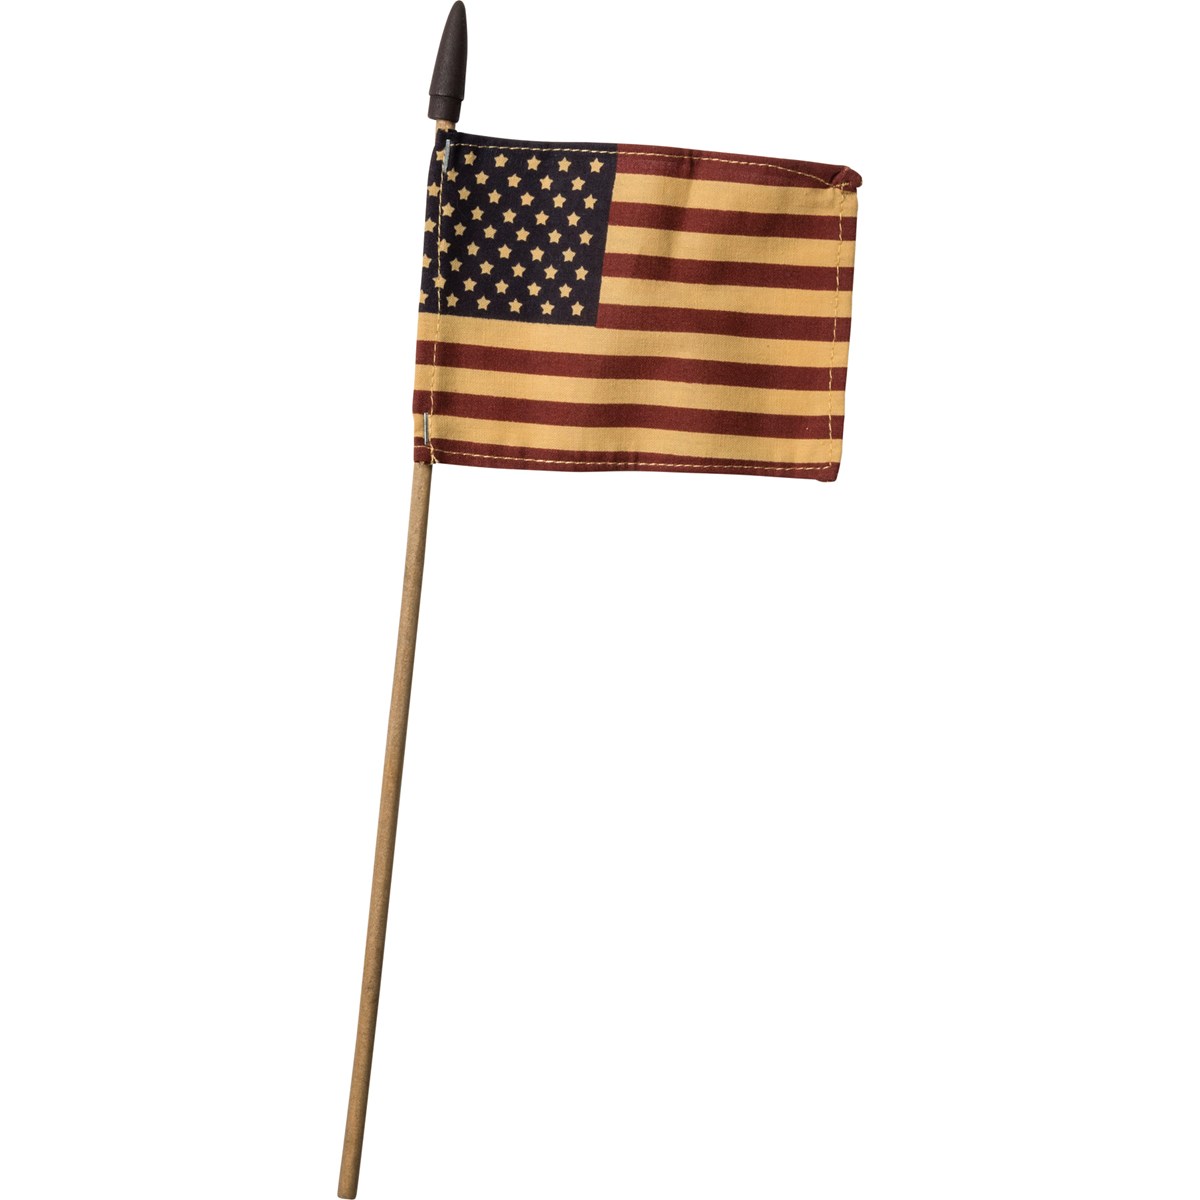 Primitive American Small Flag - Fabric, Wood